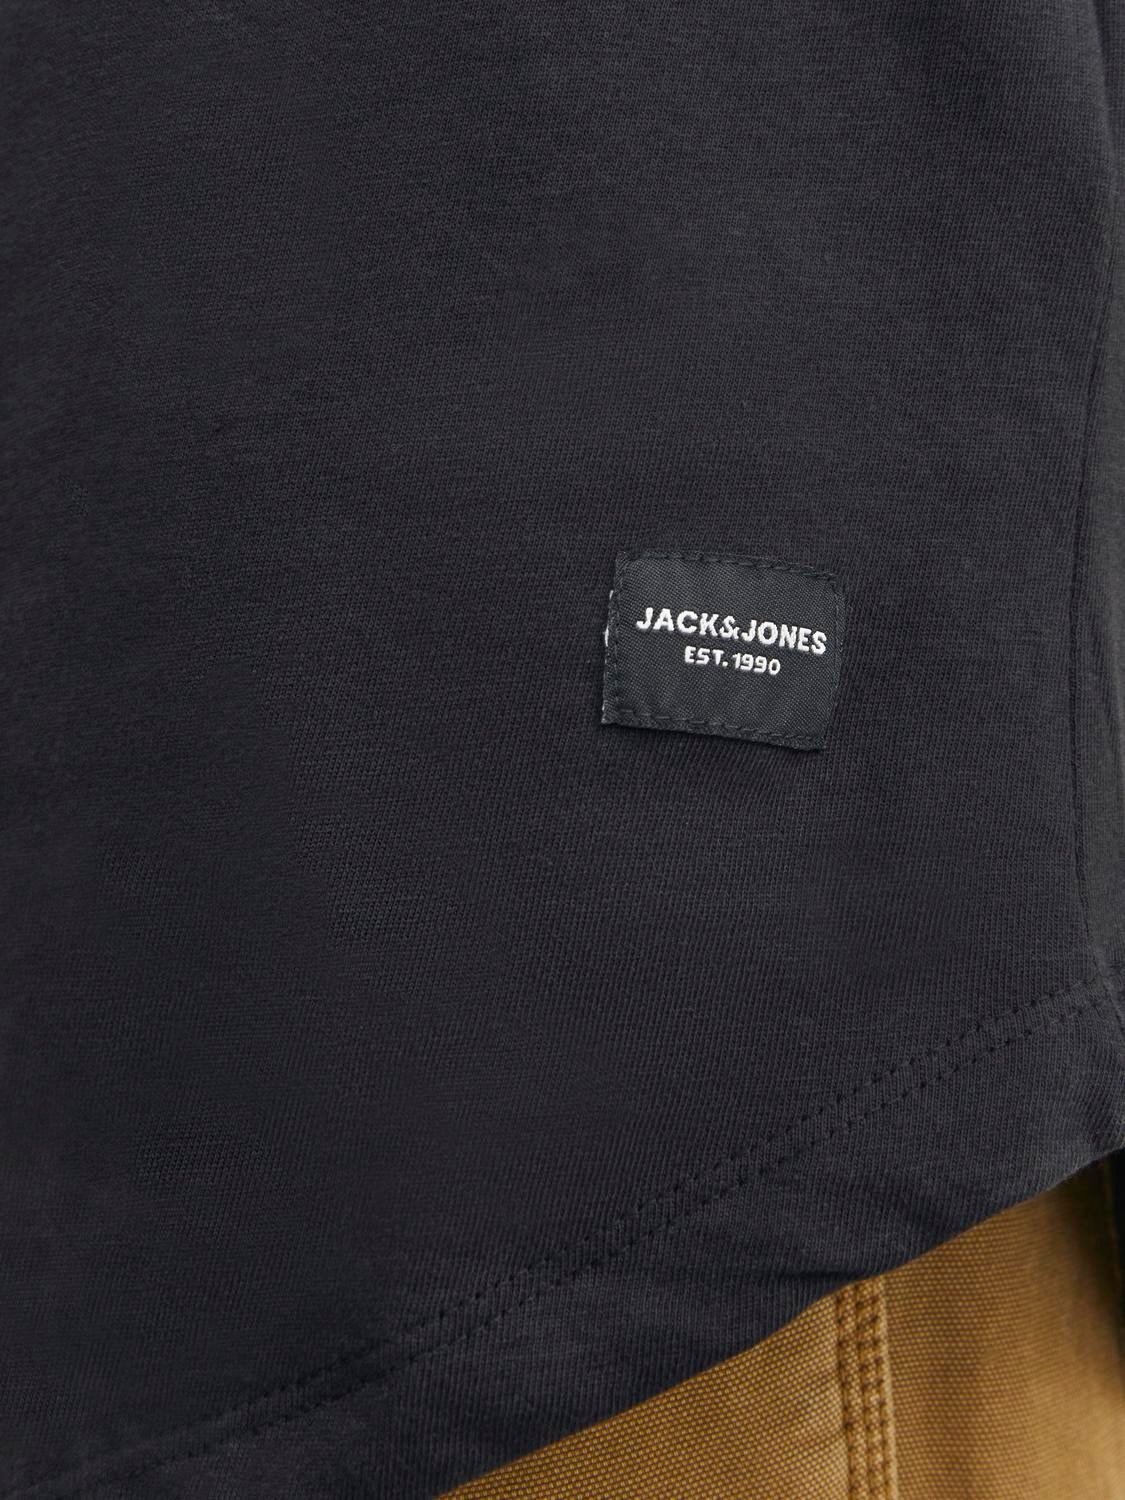 Jack & Jones Long Line Fit O-Neck Noa T-Shirt -Black - 12210945